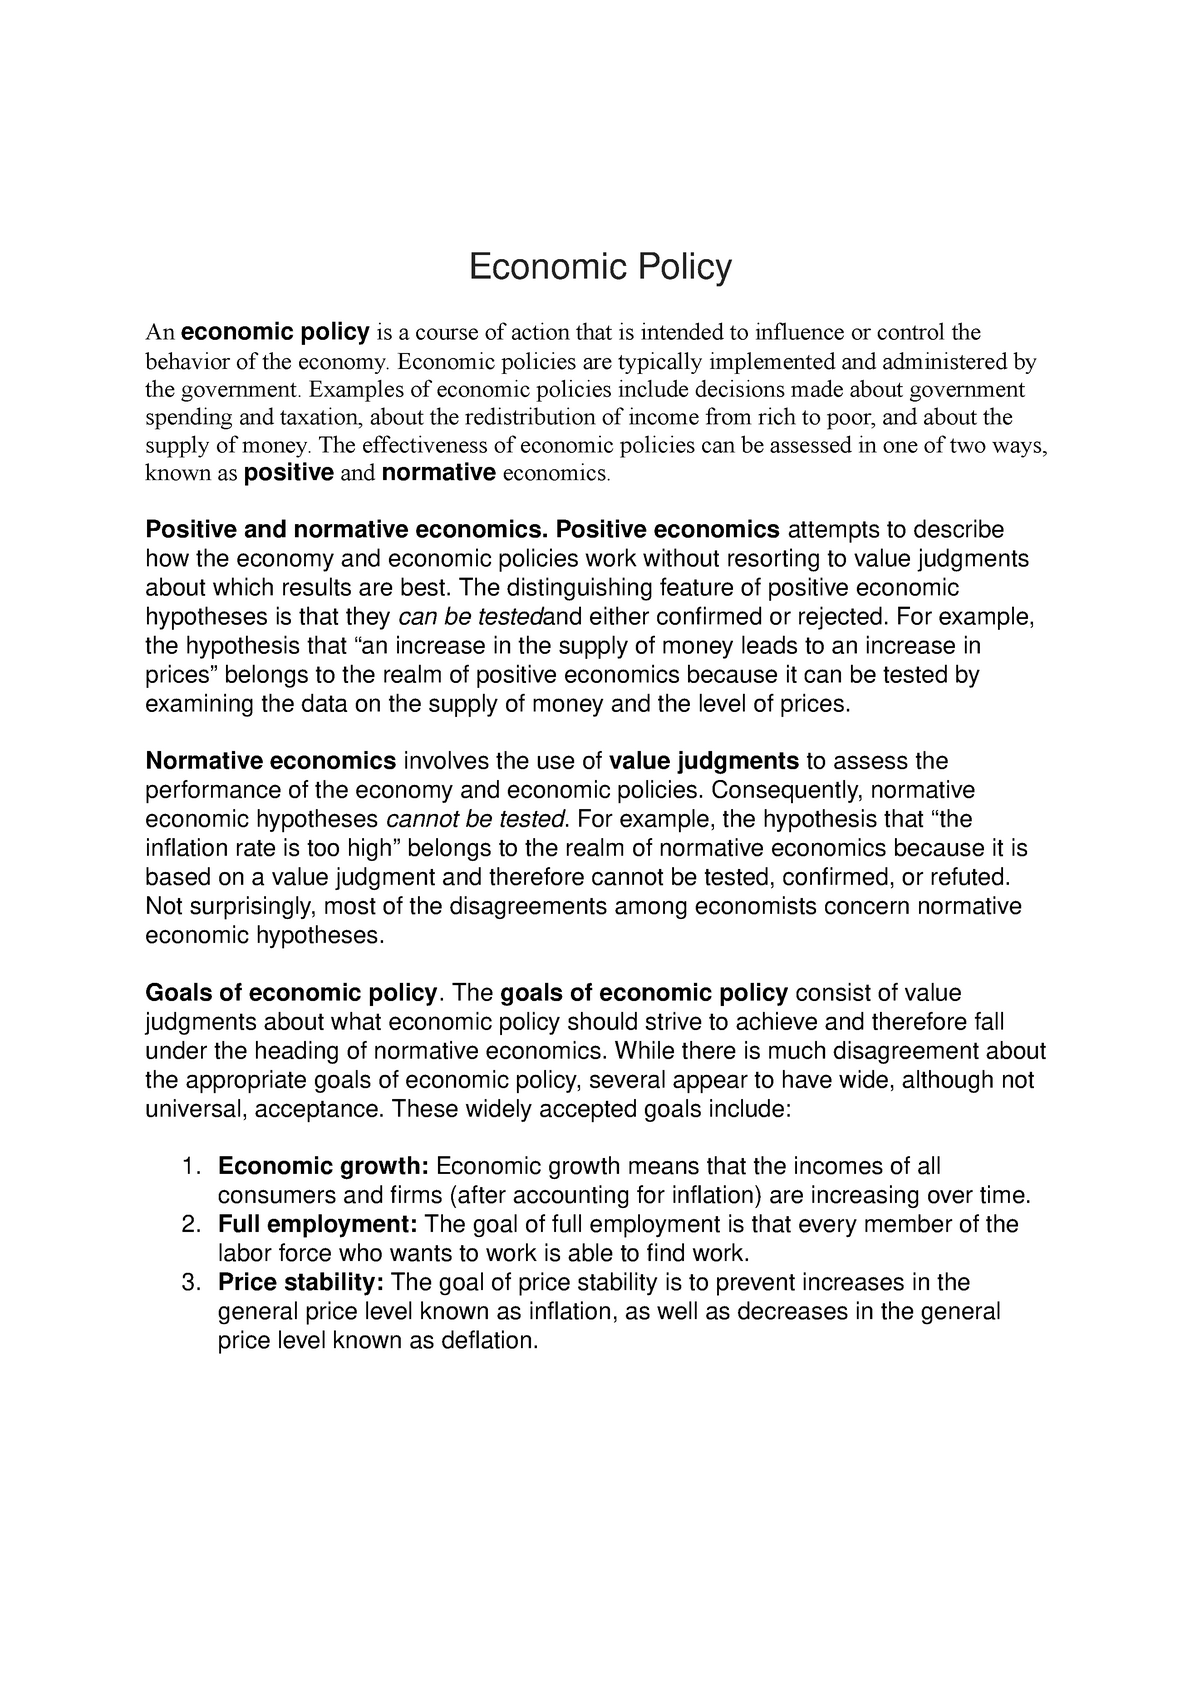 new economic policy essay in english